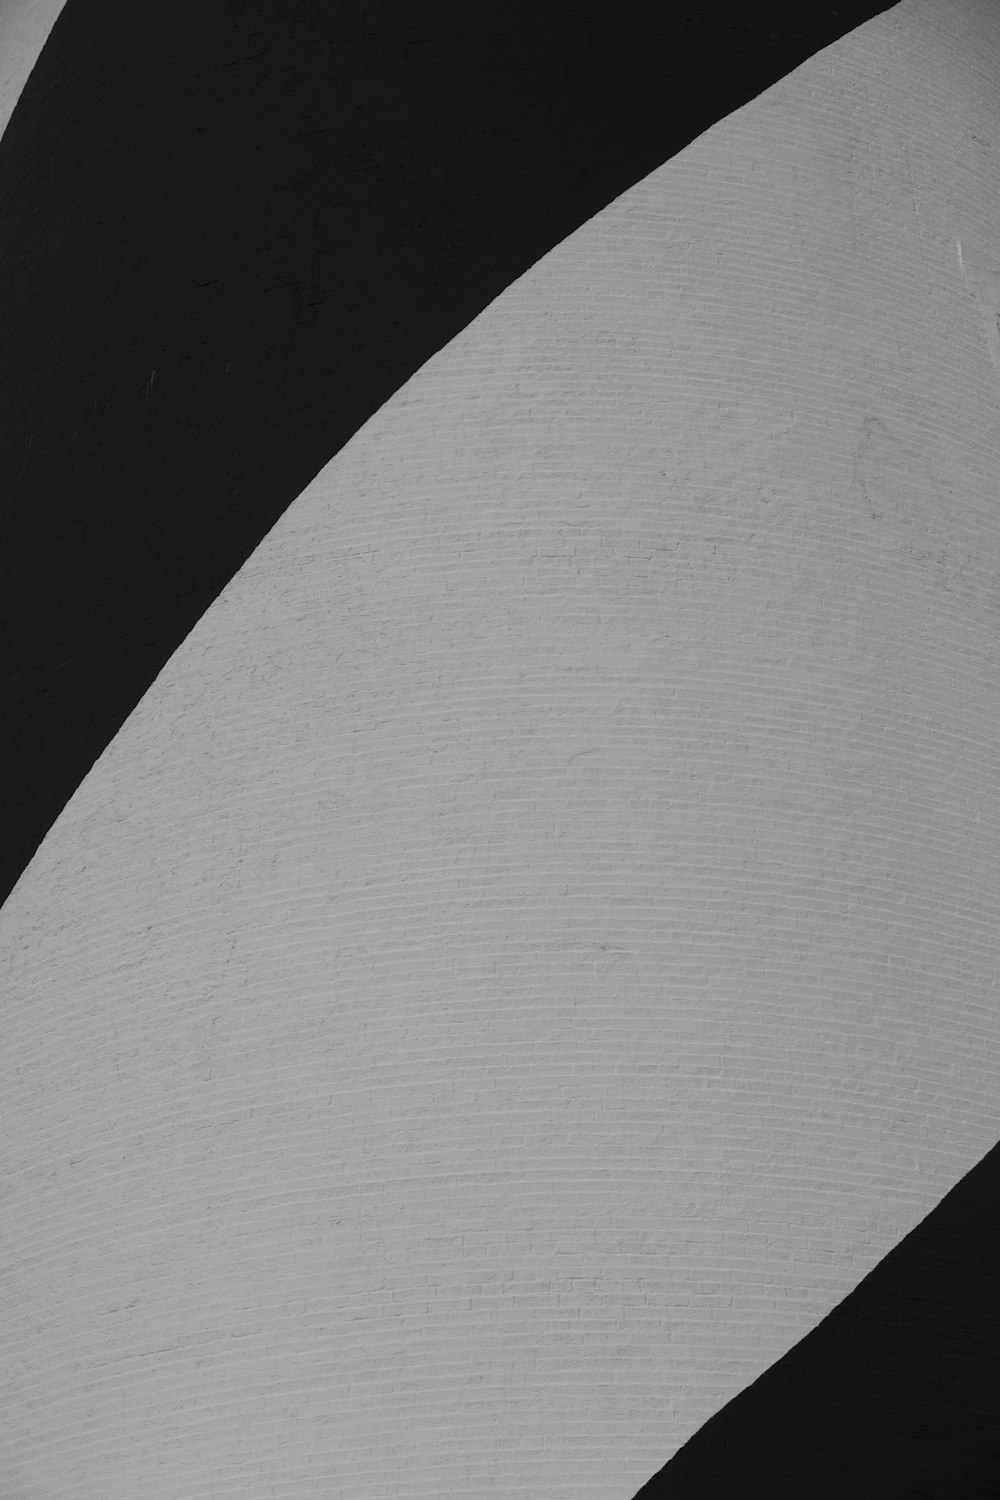 white paper on black textile